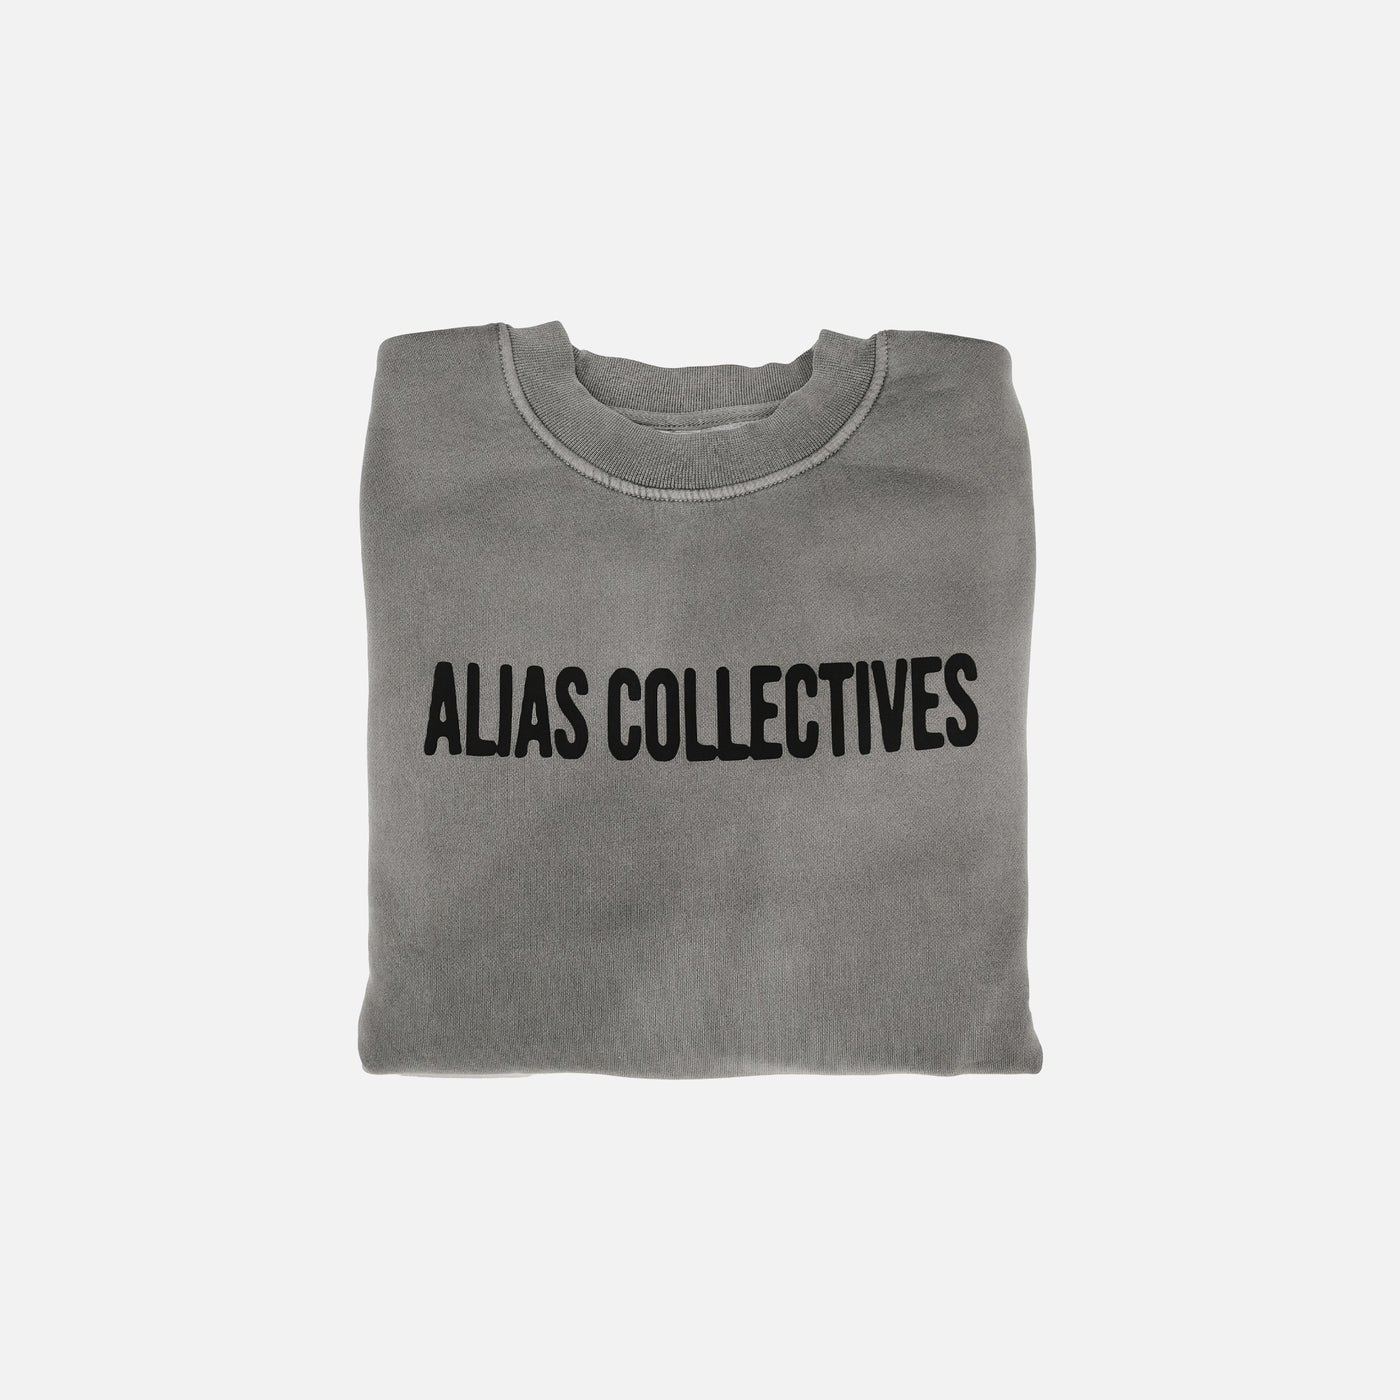 Alias Collectives Sweatsuit (3 Colors)